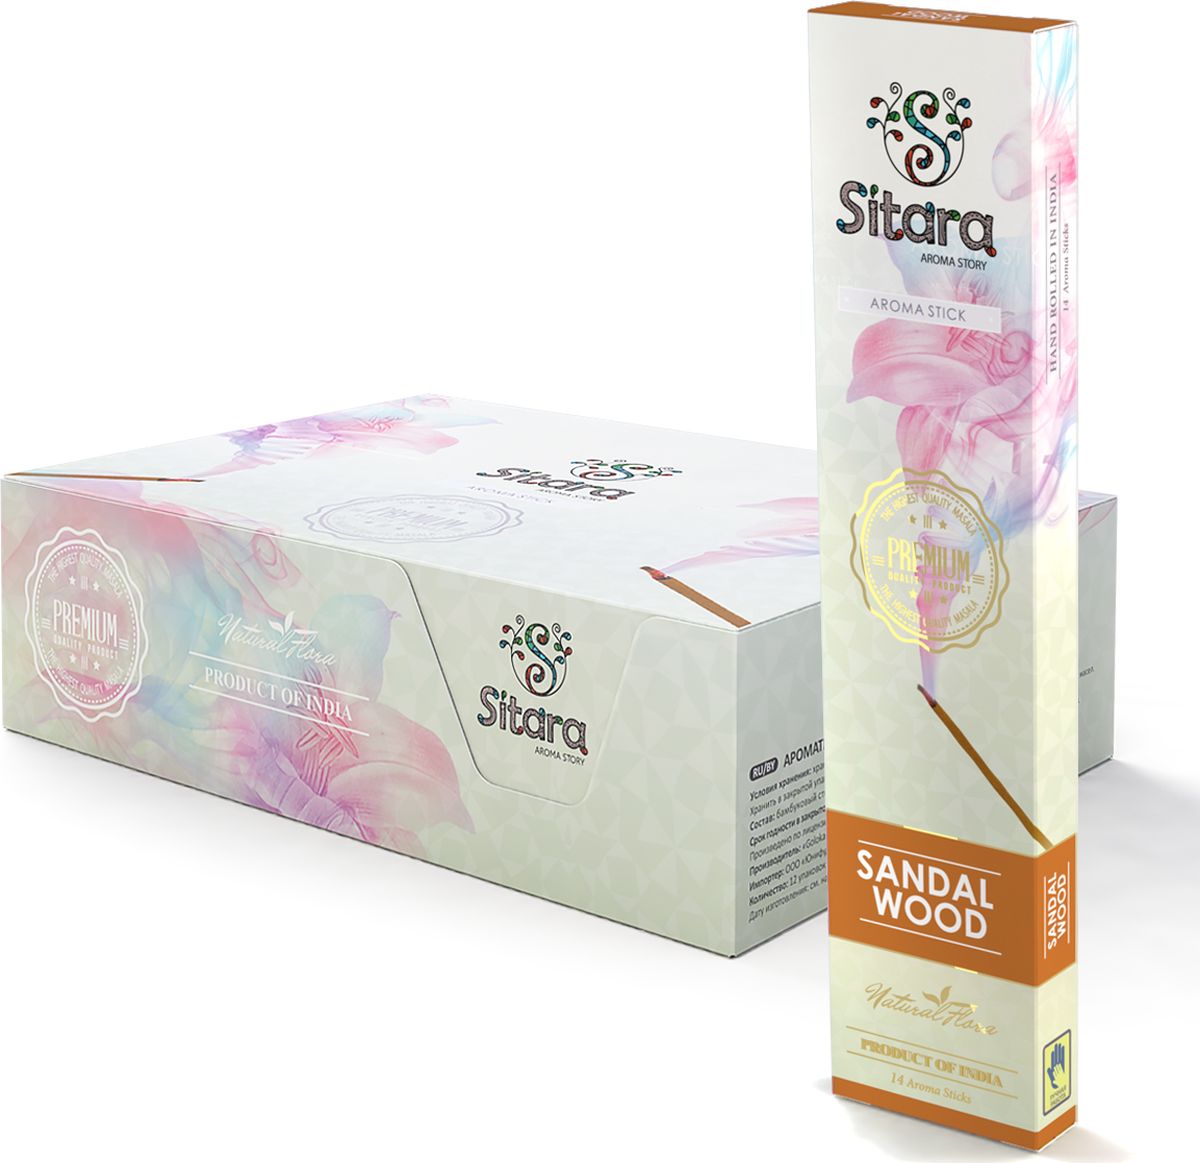 фото Ароматические палочки Sitara Premium "Sandal wood", 12 упаковок по 14 палочек